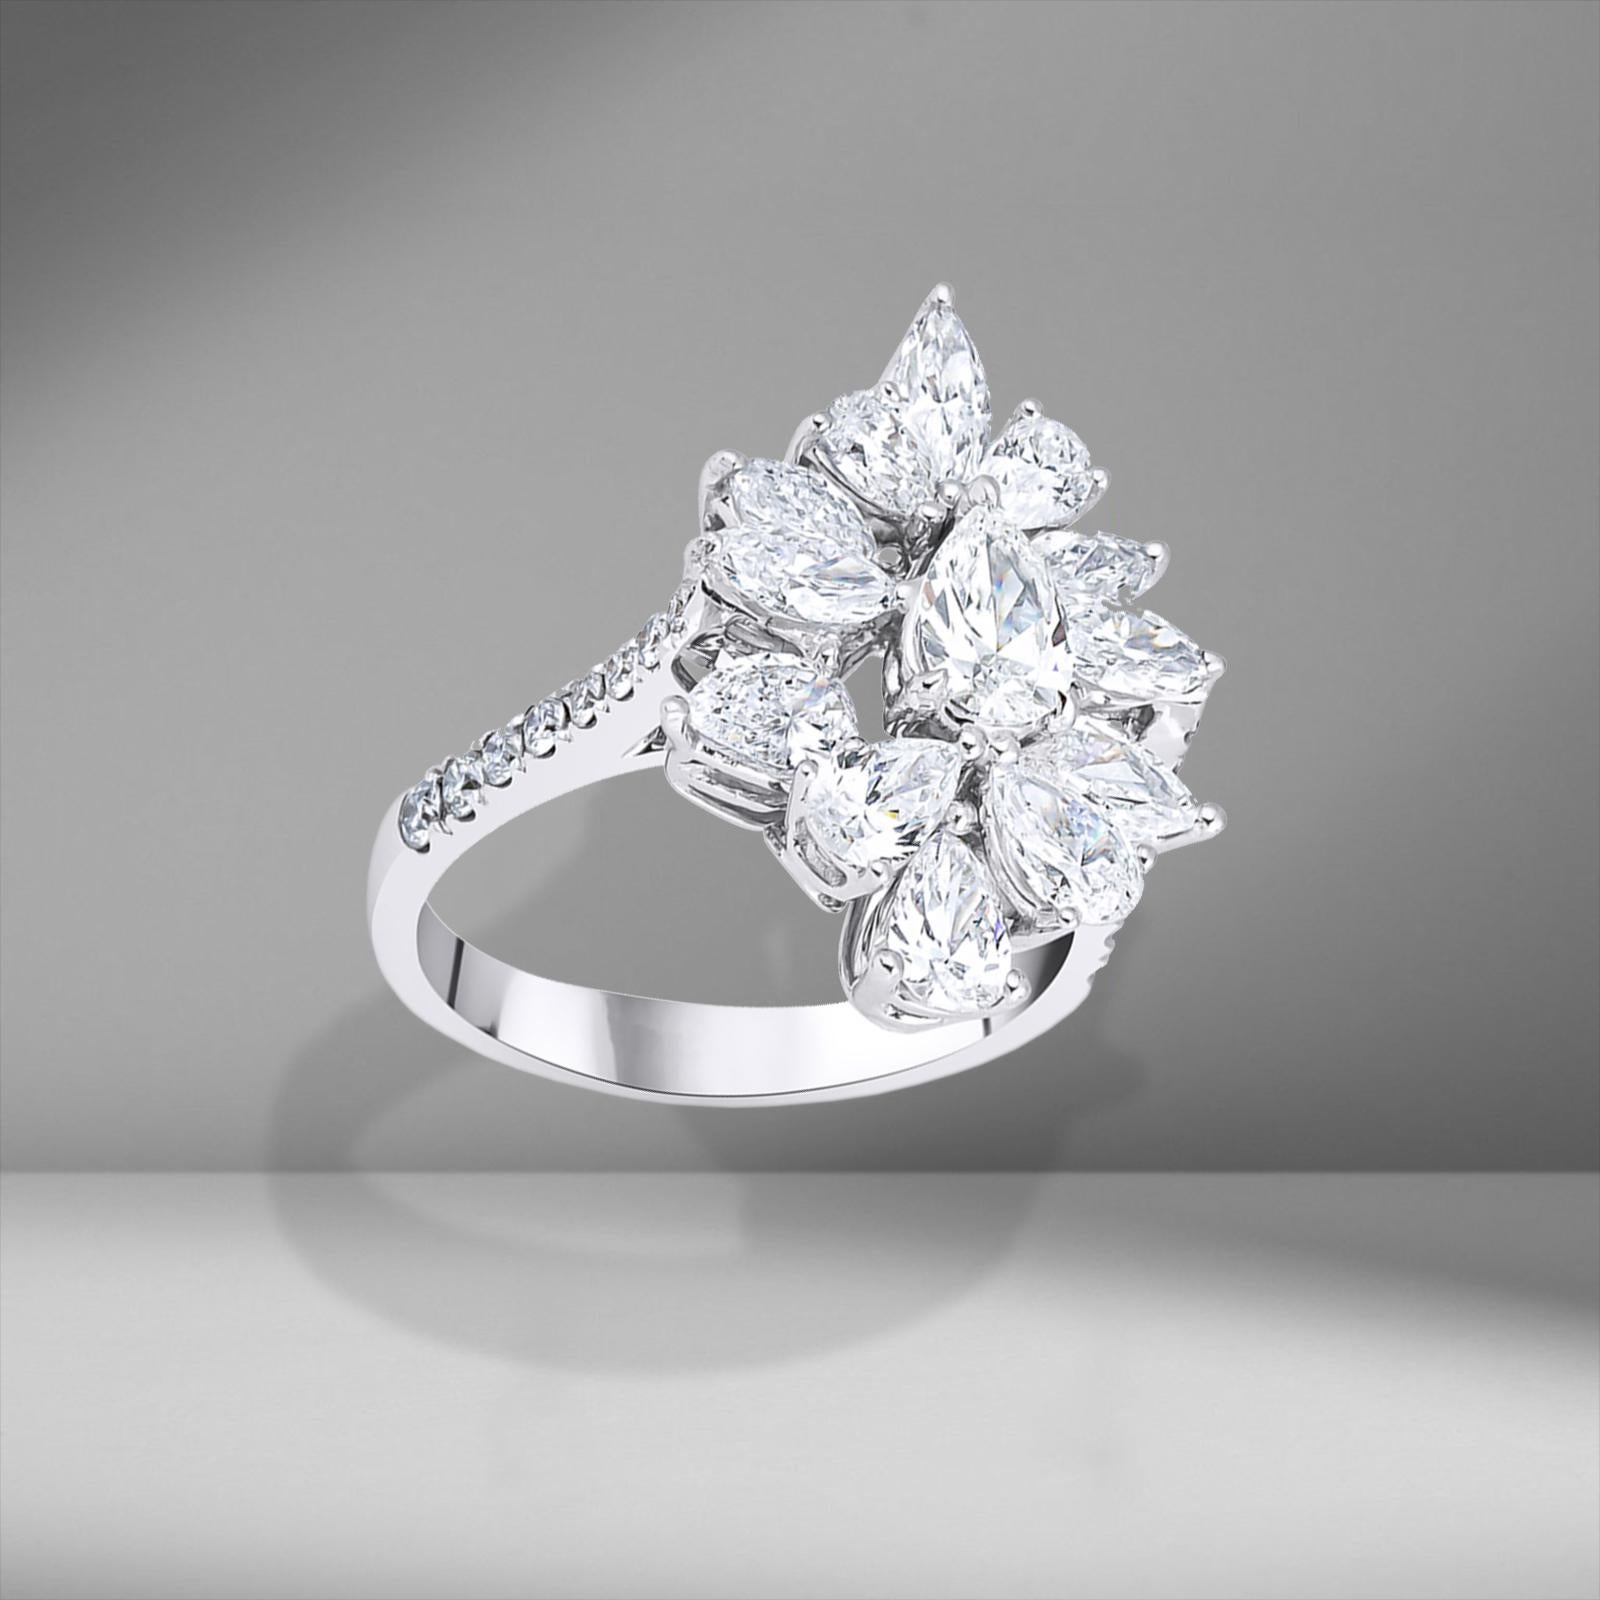 Certified 4.24 Ct Pear White Diamond Engagement Wedding Ring Set 14K White Gold 